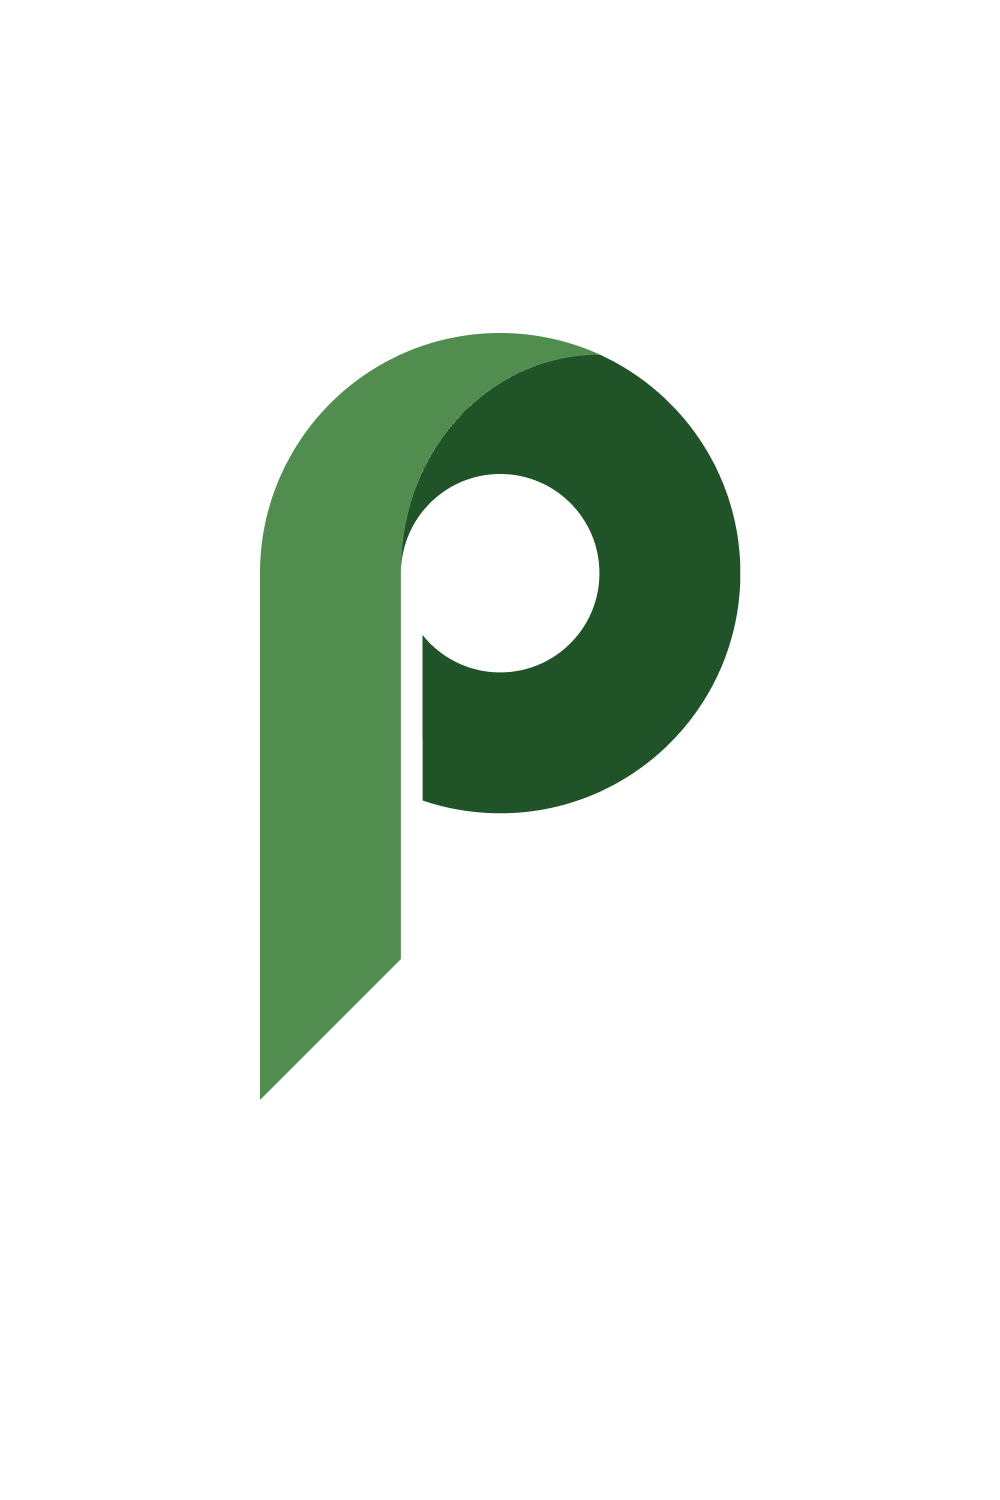 P Letter logo pinterest preview image.